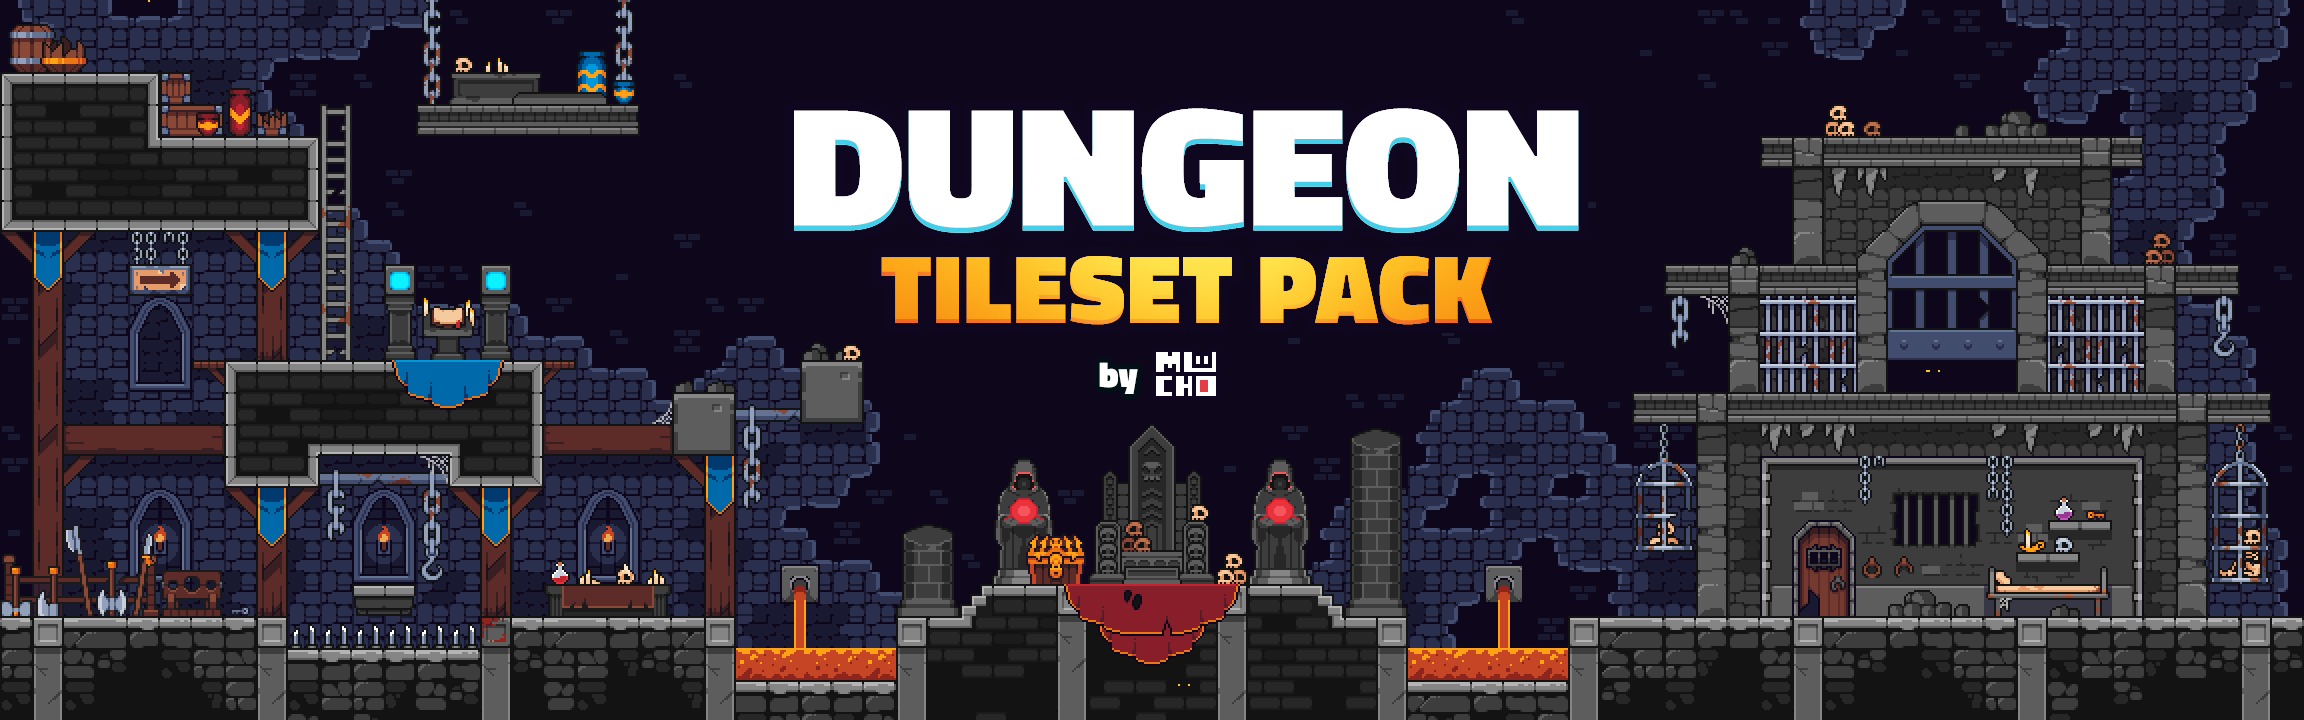 Dungeon Tileset Pack